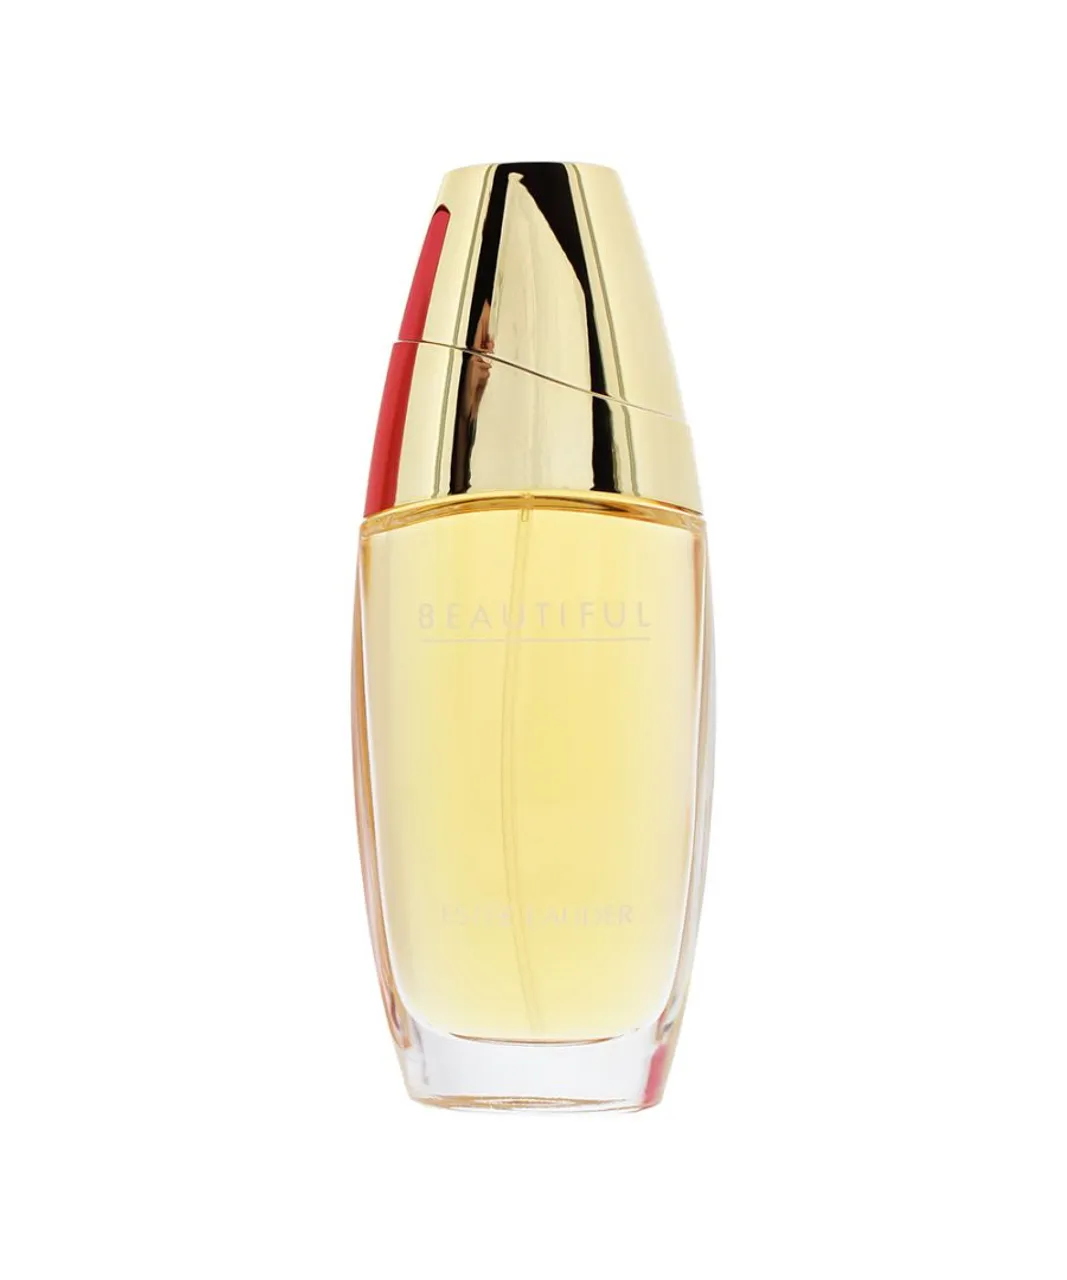 Estee Lauder Womens Beautiful Eau de Parfum 75ml Spray For Her - Orange - One Size